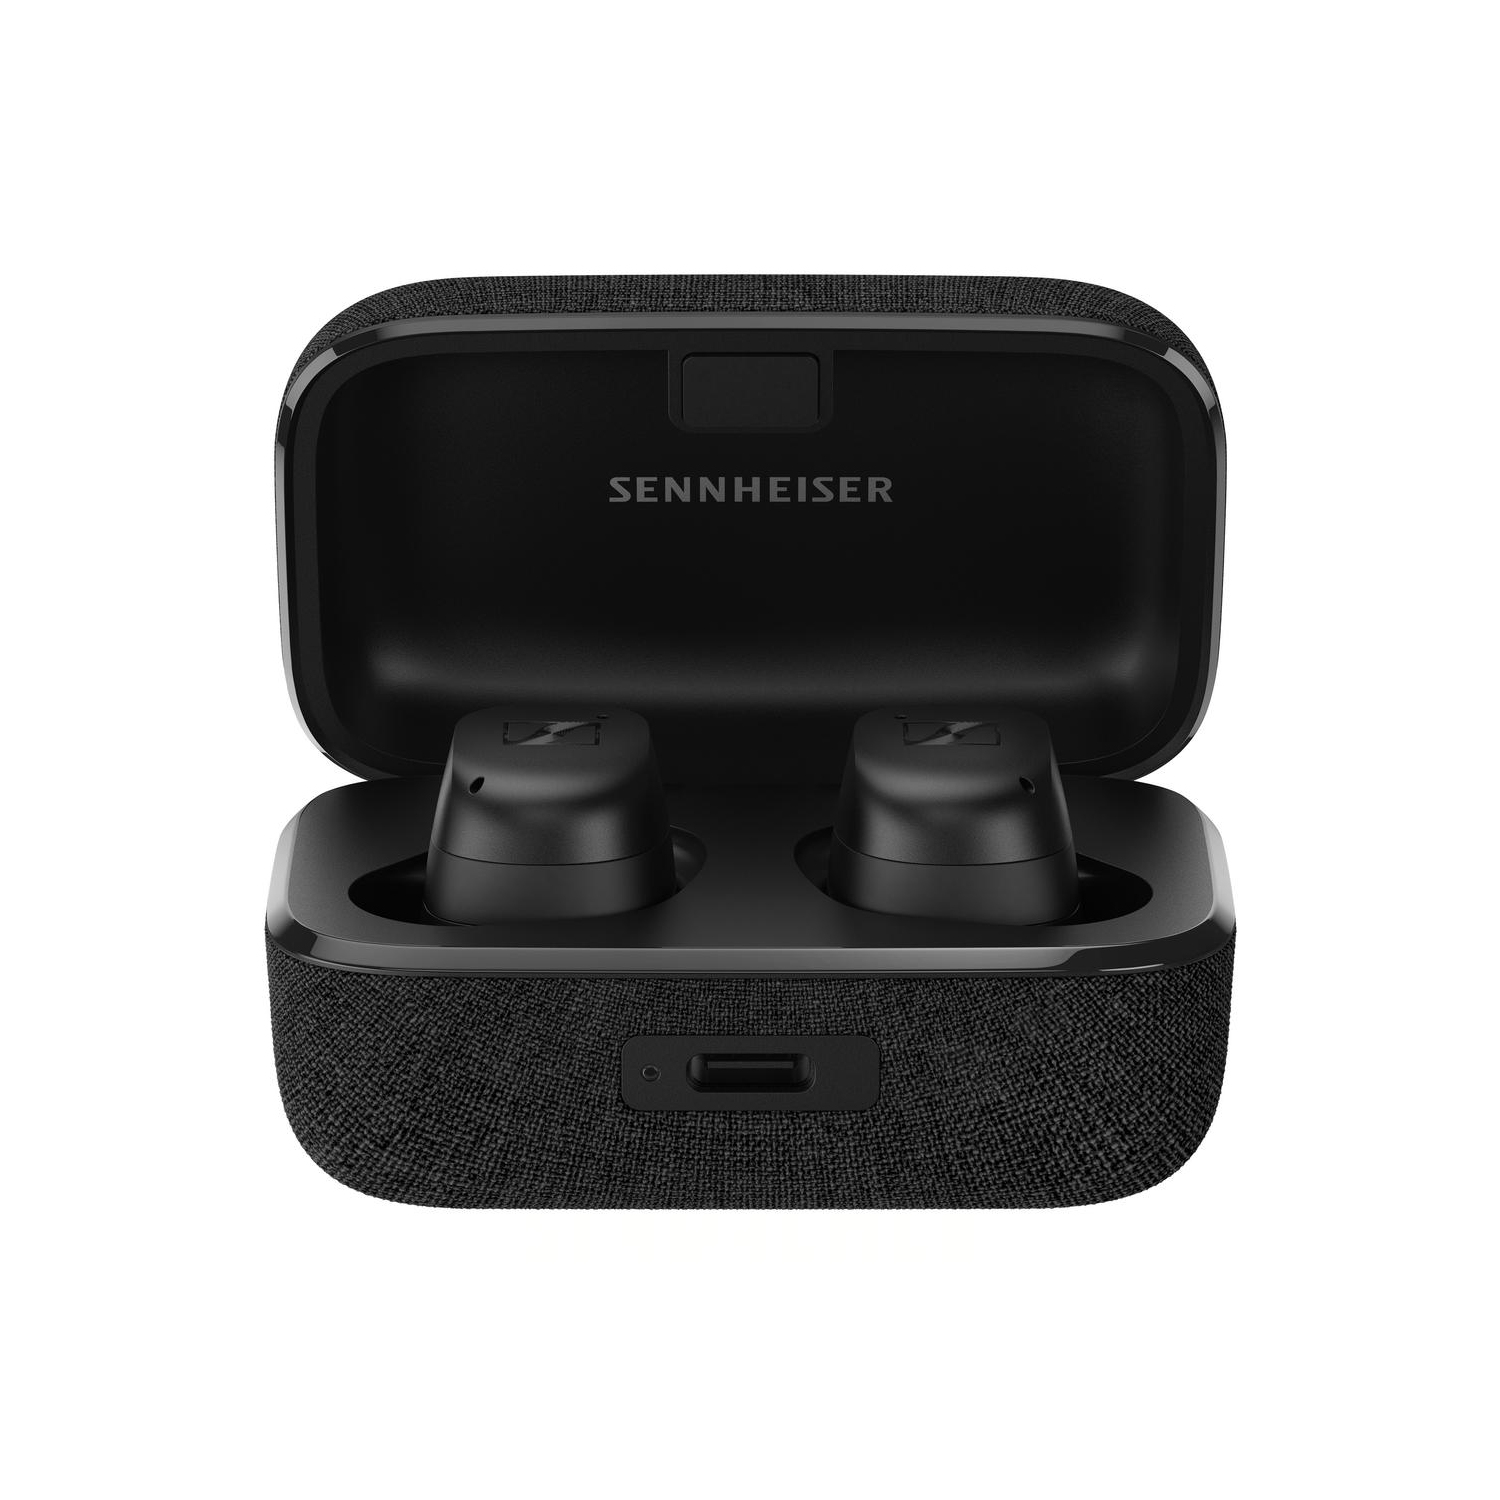 Refurbished (Excellent) Sennheiser Momentum True Wireless 3 Earbuds -Bluetooth in-Ear Headphones - Black